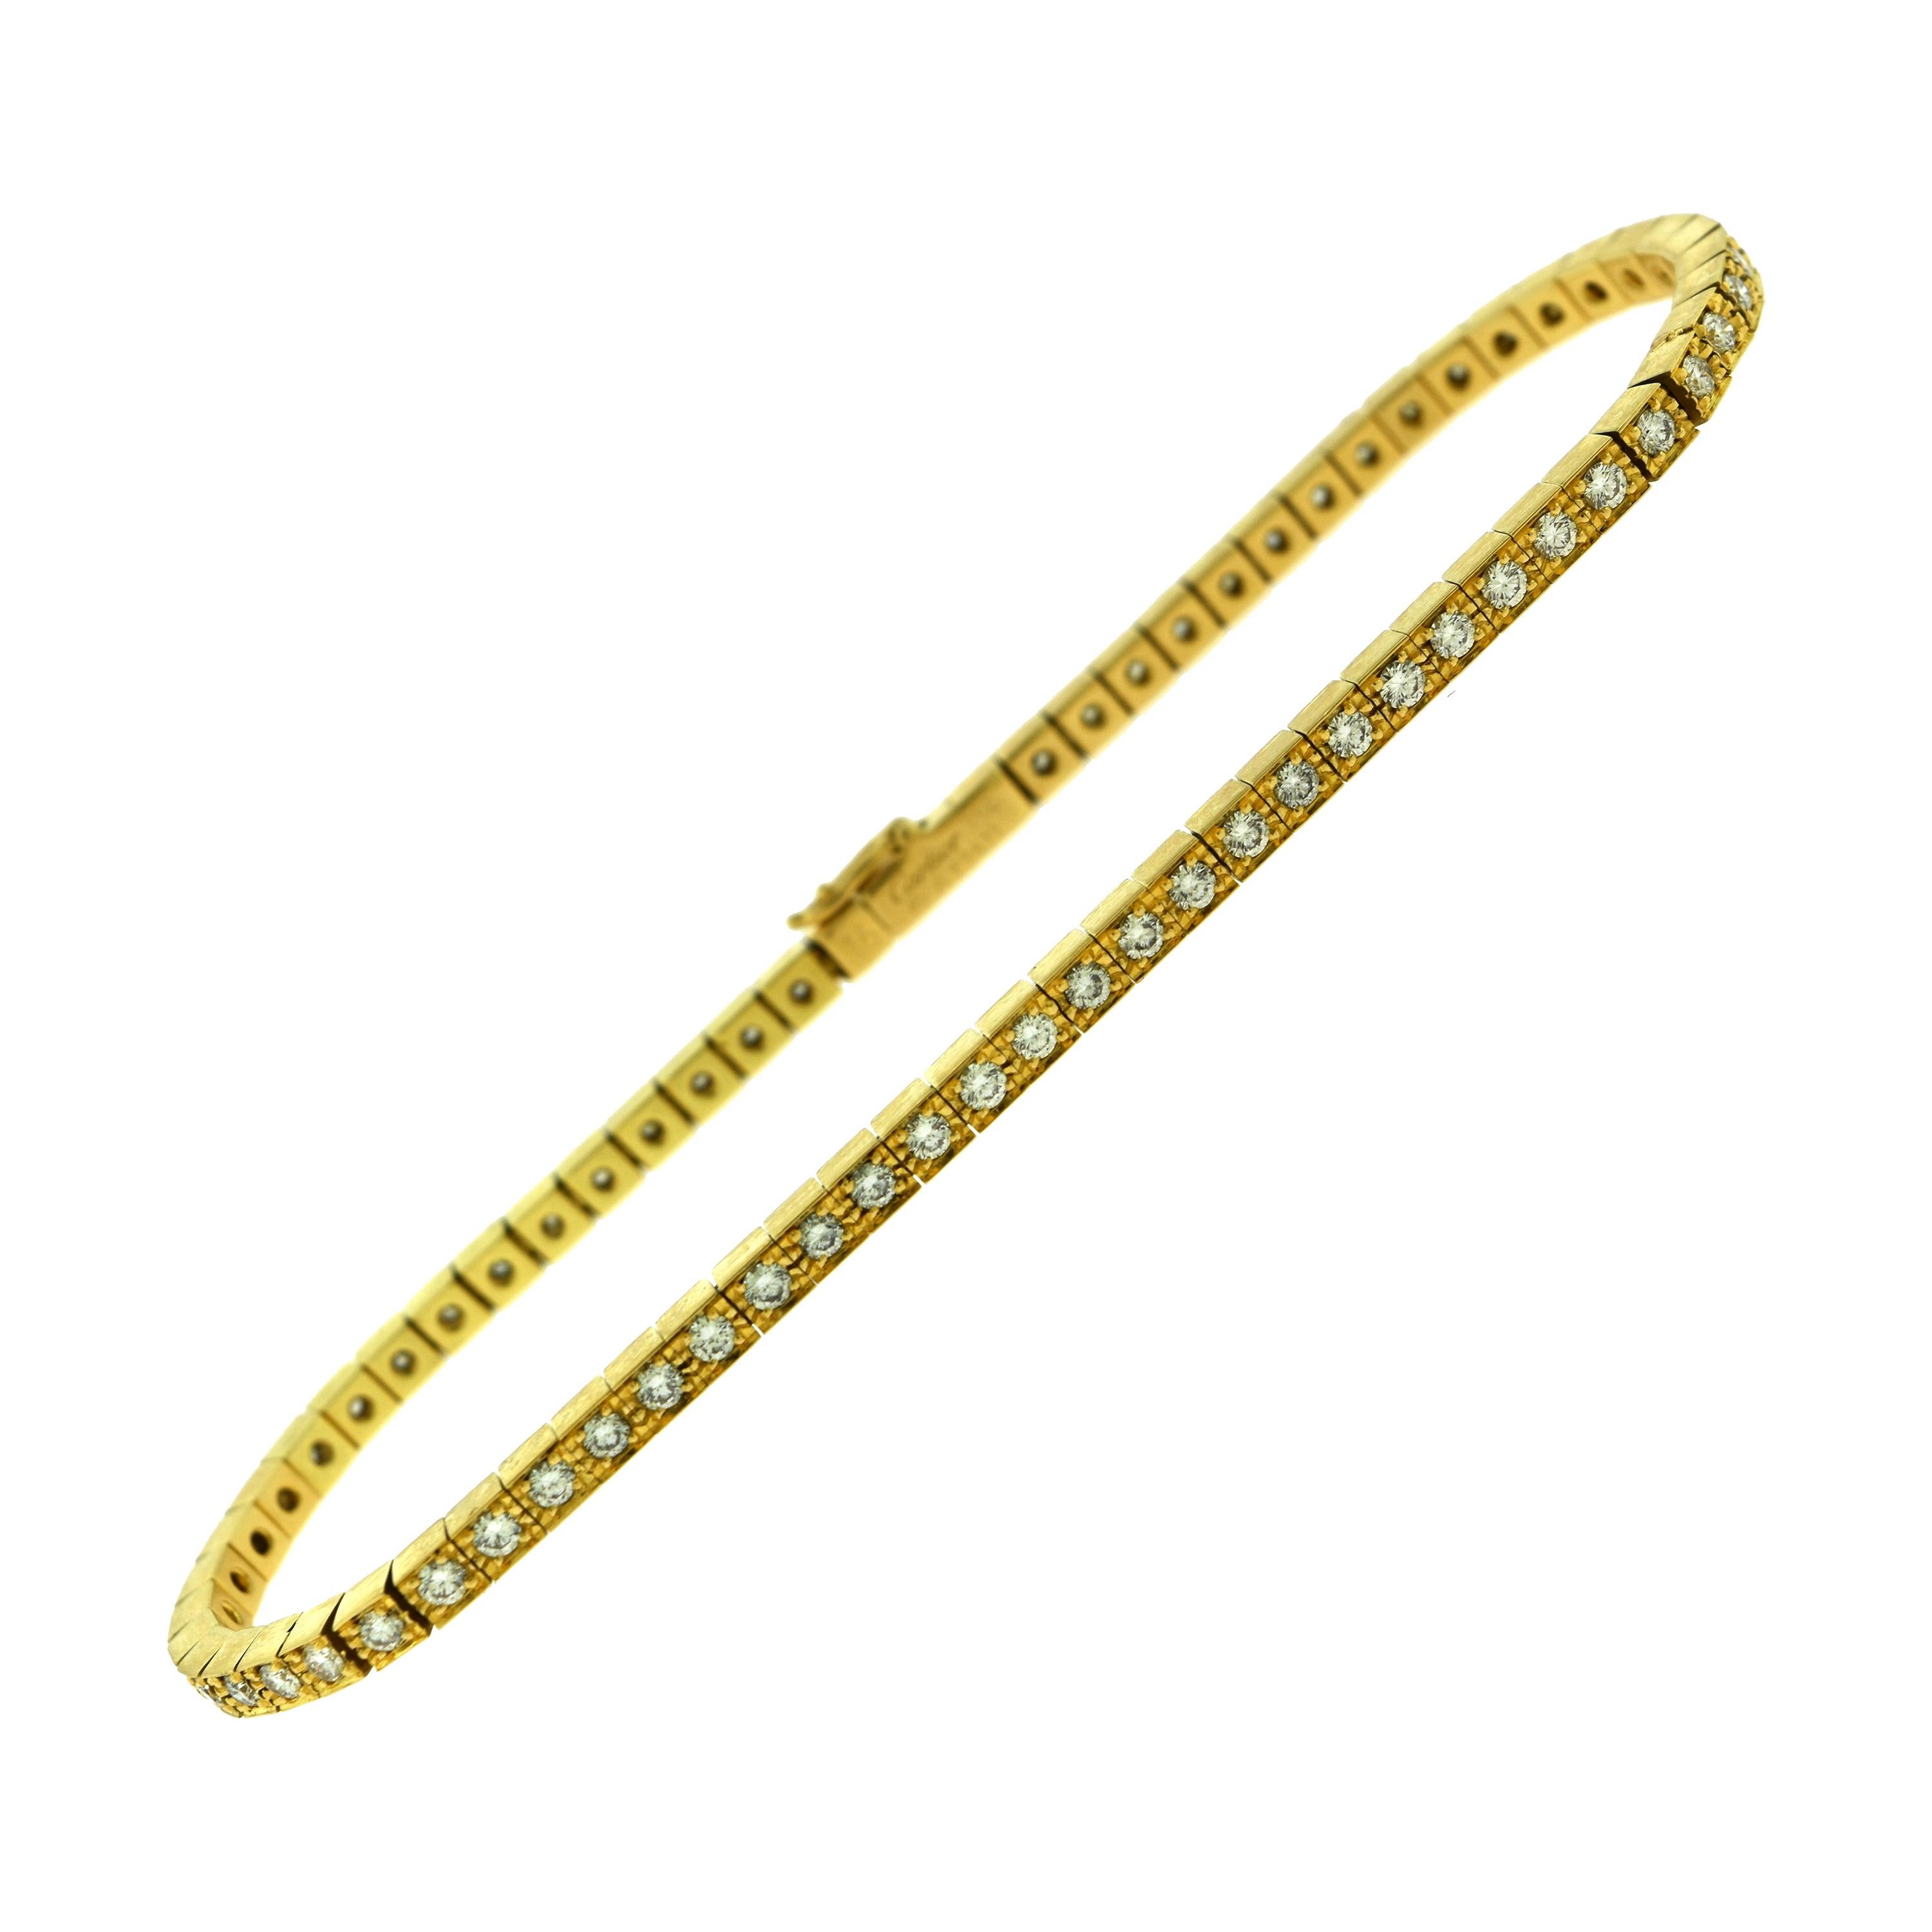 Cartier Laniere Diamond Tennis Line Yellow Gold Bracelet